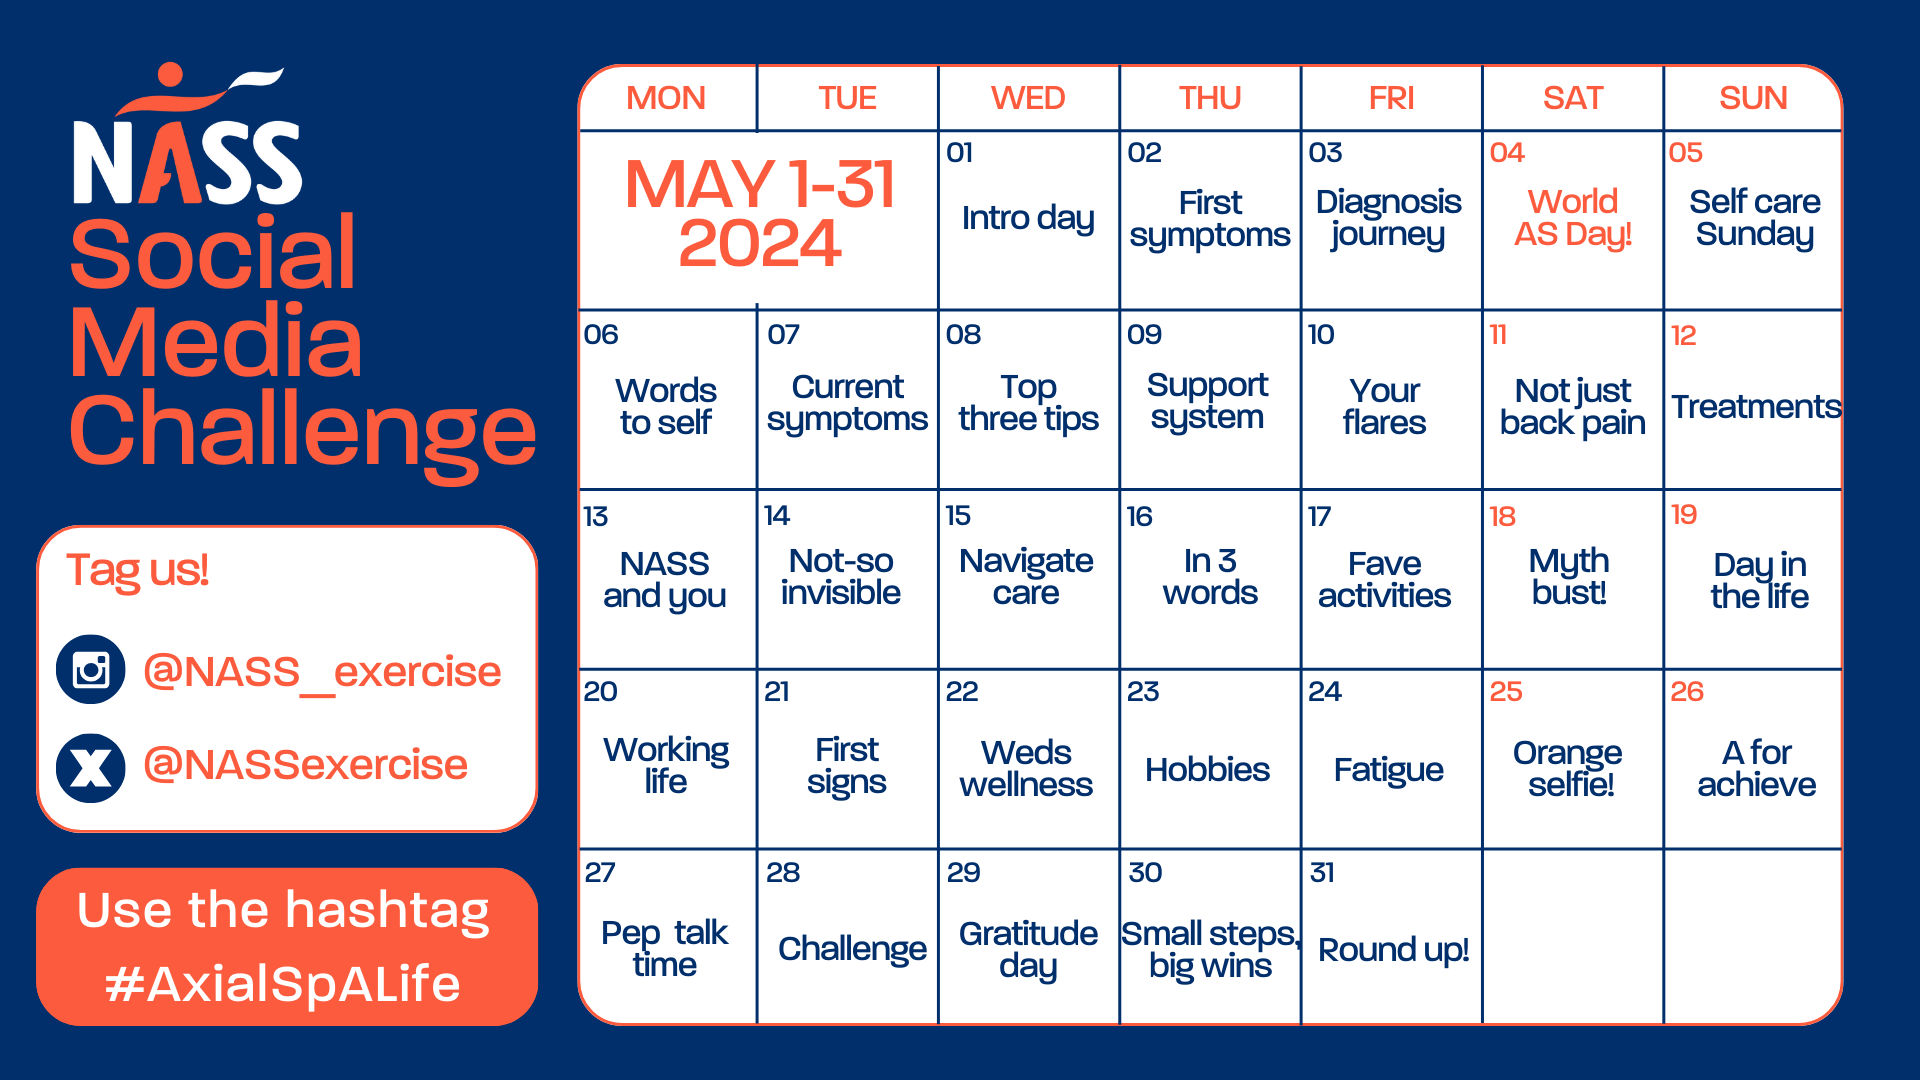 NASS social media challenge calendar